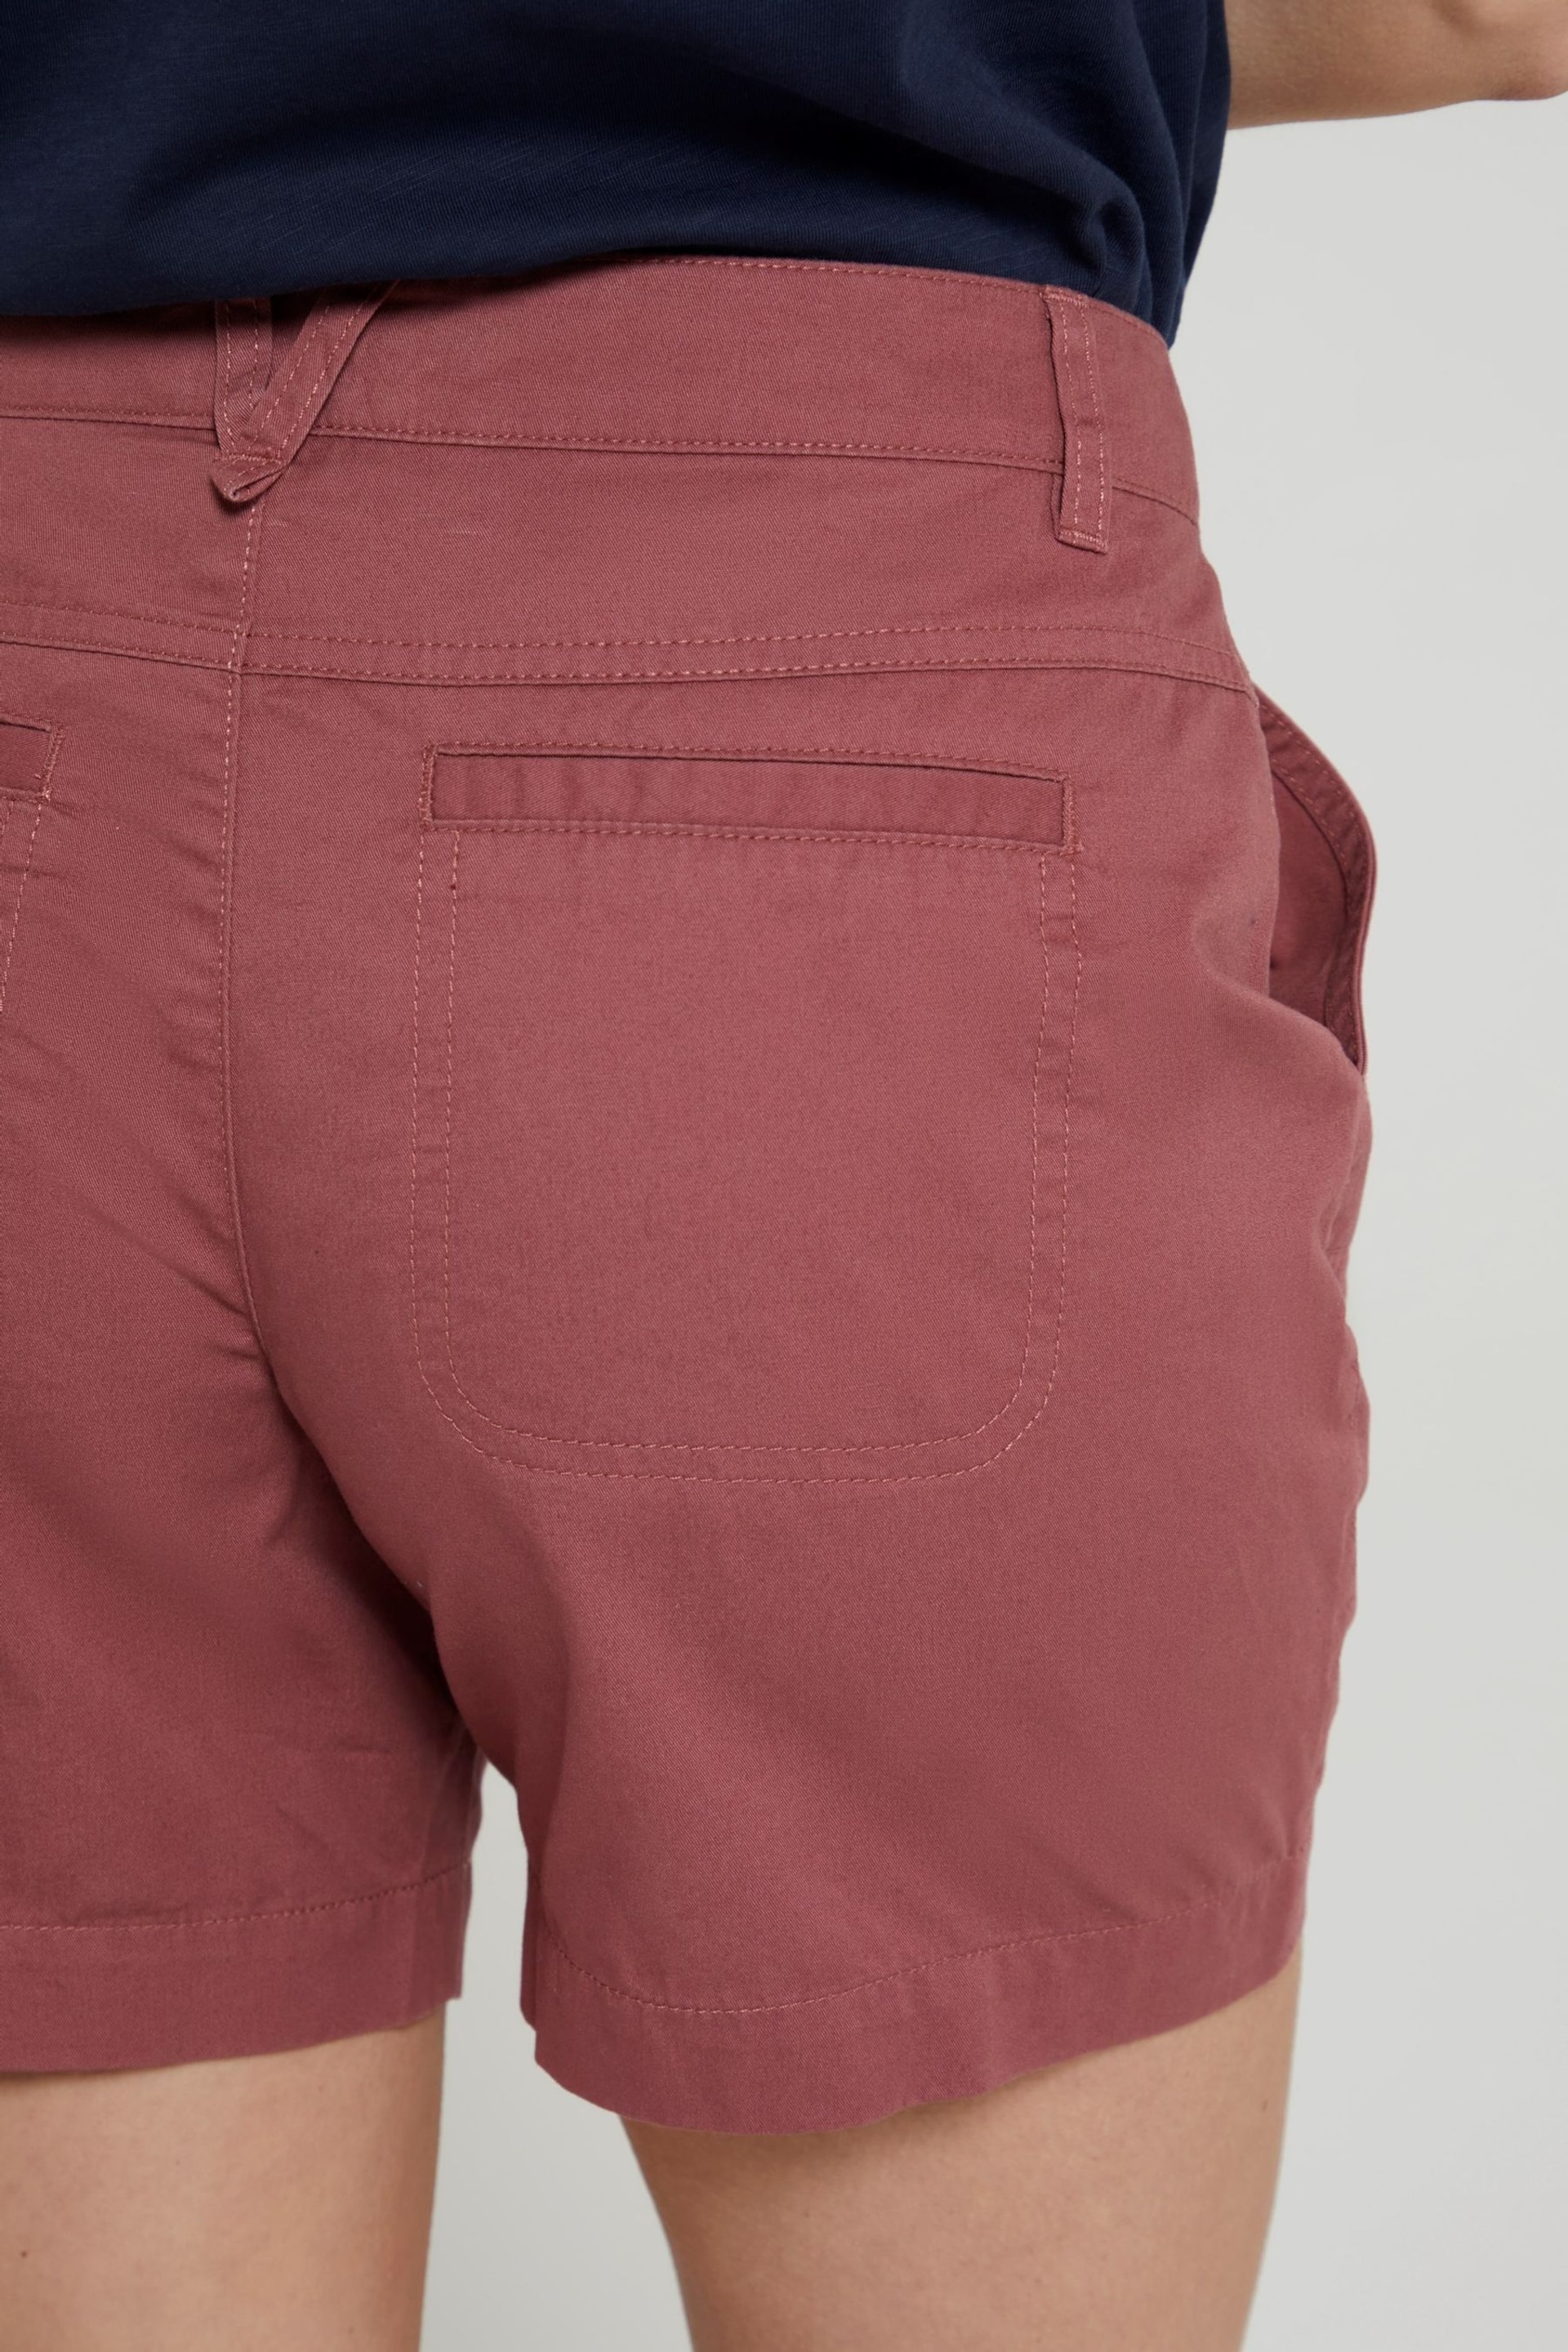 Mountain Warehouse Pink Bayside 100% Organic Cotton Womens Shorts - Image 4 of 5